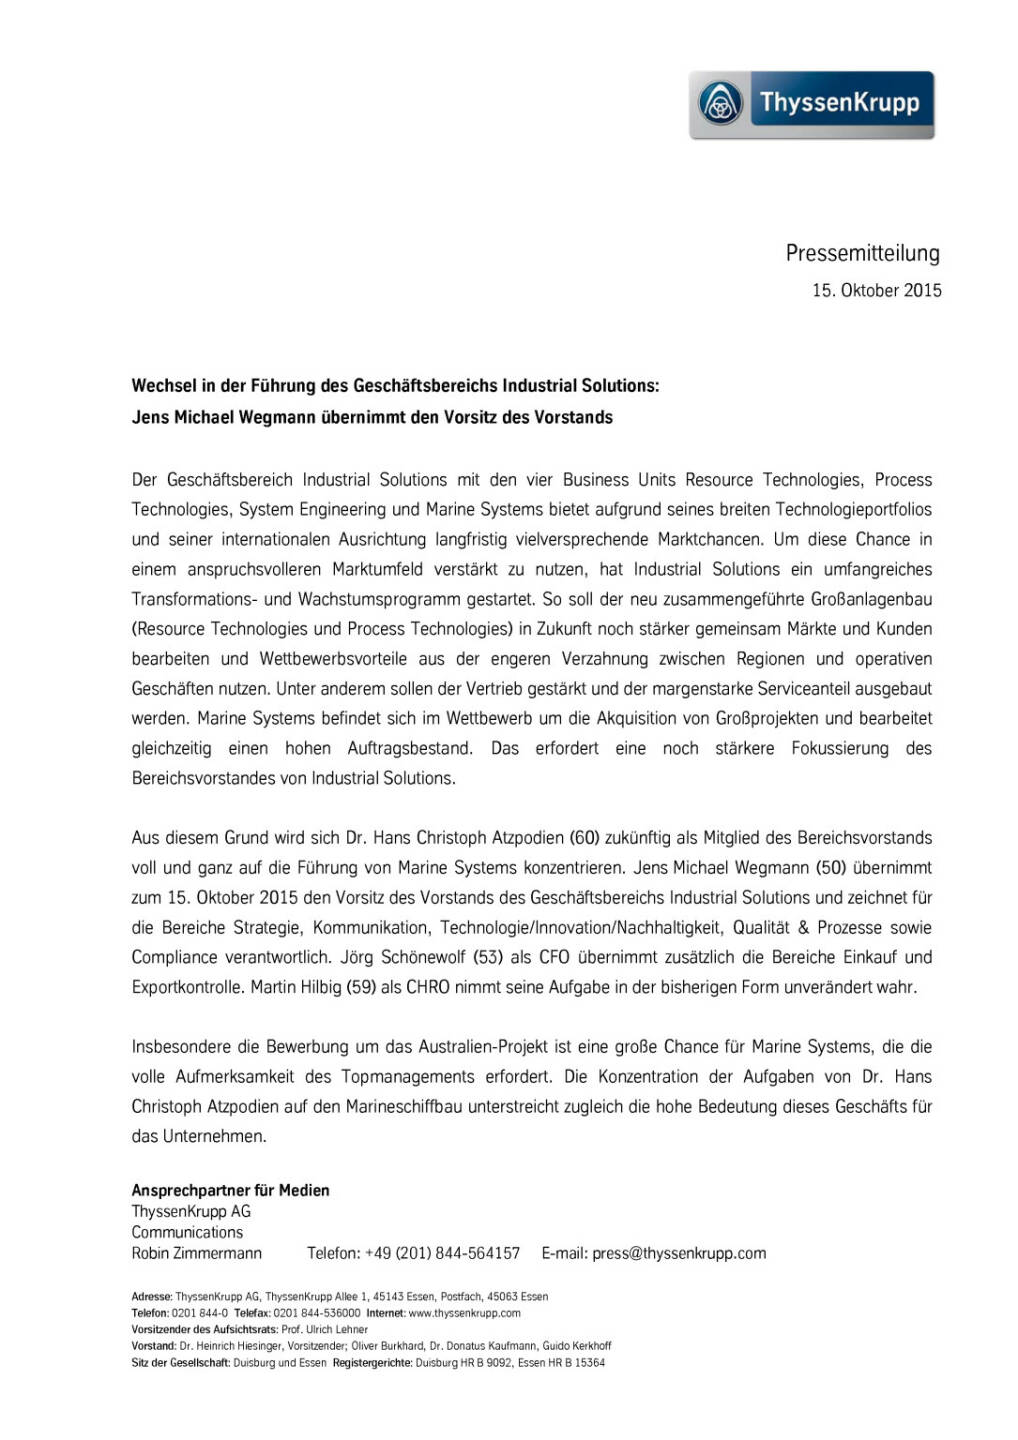 ThyssenKrupp: Jens Michael Wegmann übernimmt den Vorsitz des Vorstands (Industrial Solutions), Seite 1/1, komplettes Dokument unter http://boerse-social.com/static/uploads/file_412_thyssenkrupp_jens_michael_wegmann_übernimmt_den_vorsitz_des_vorstands_industrial_solutions.pdf